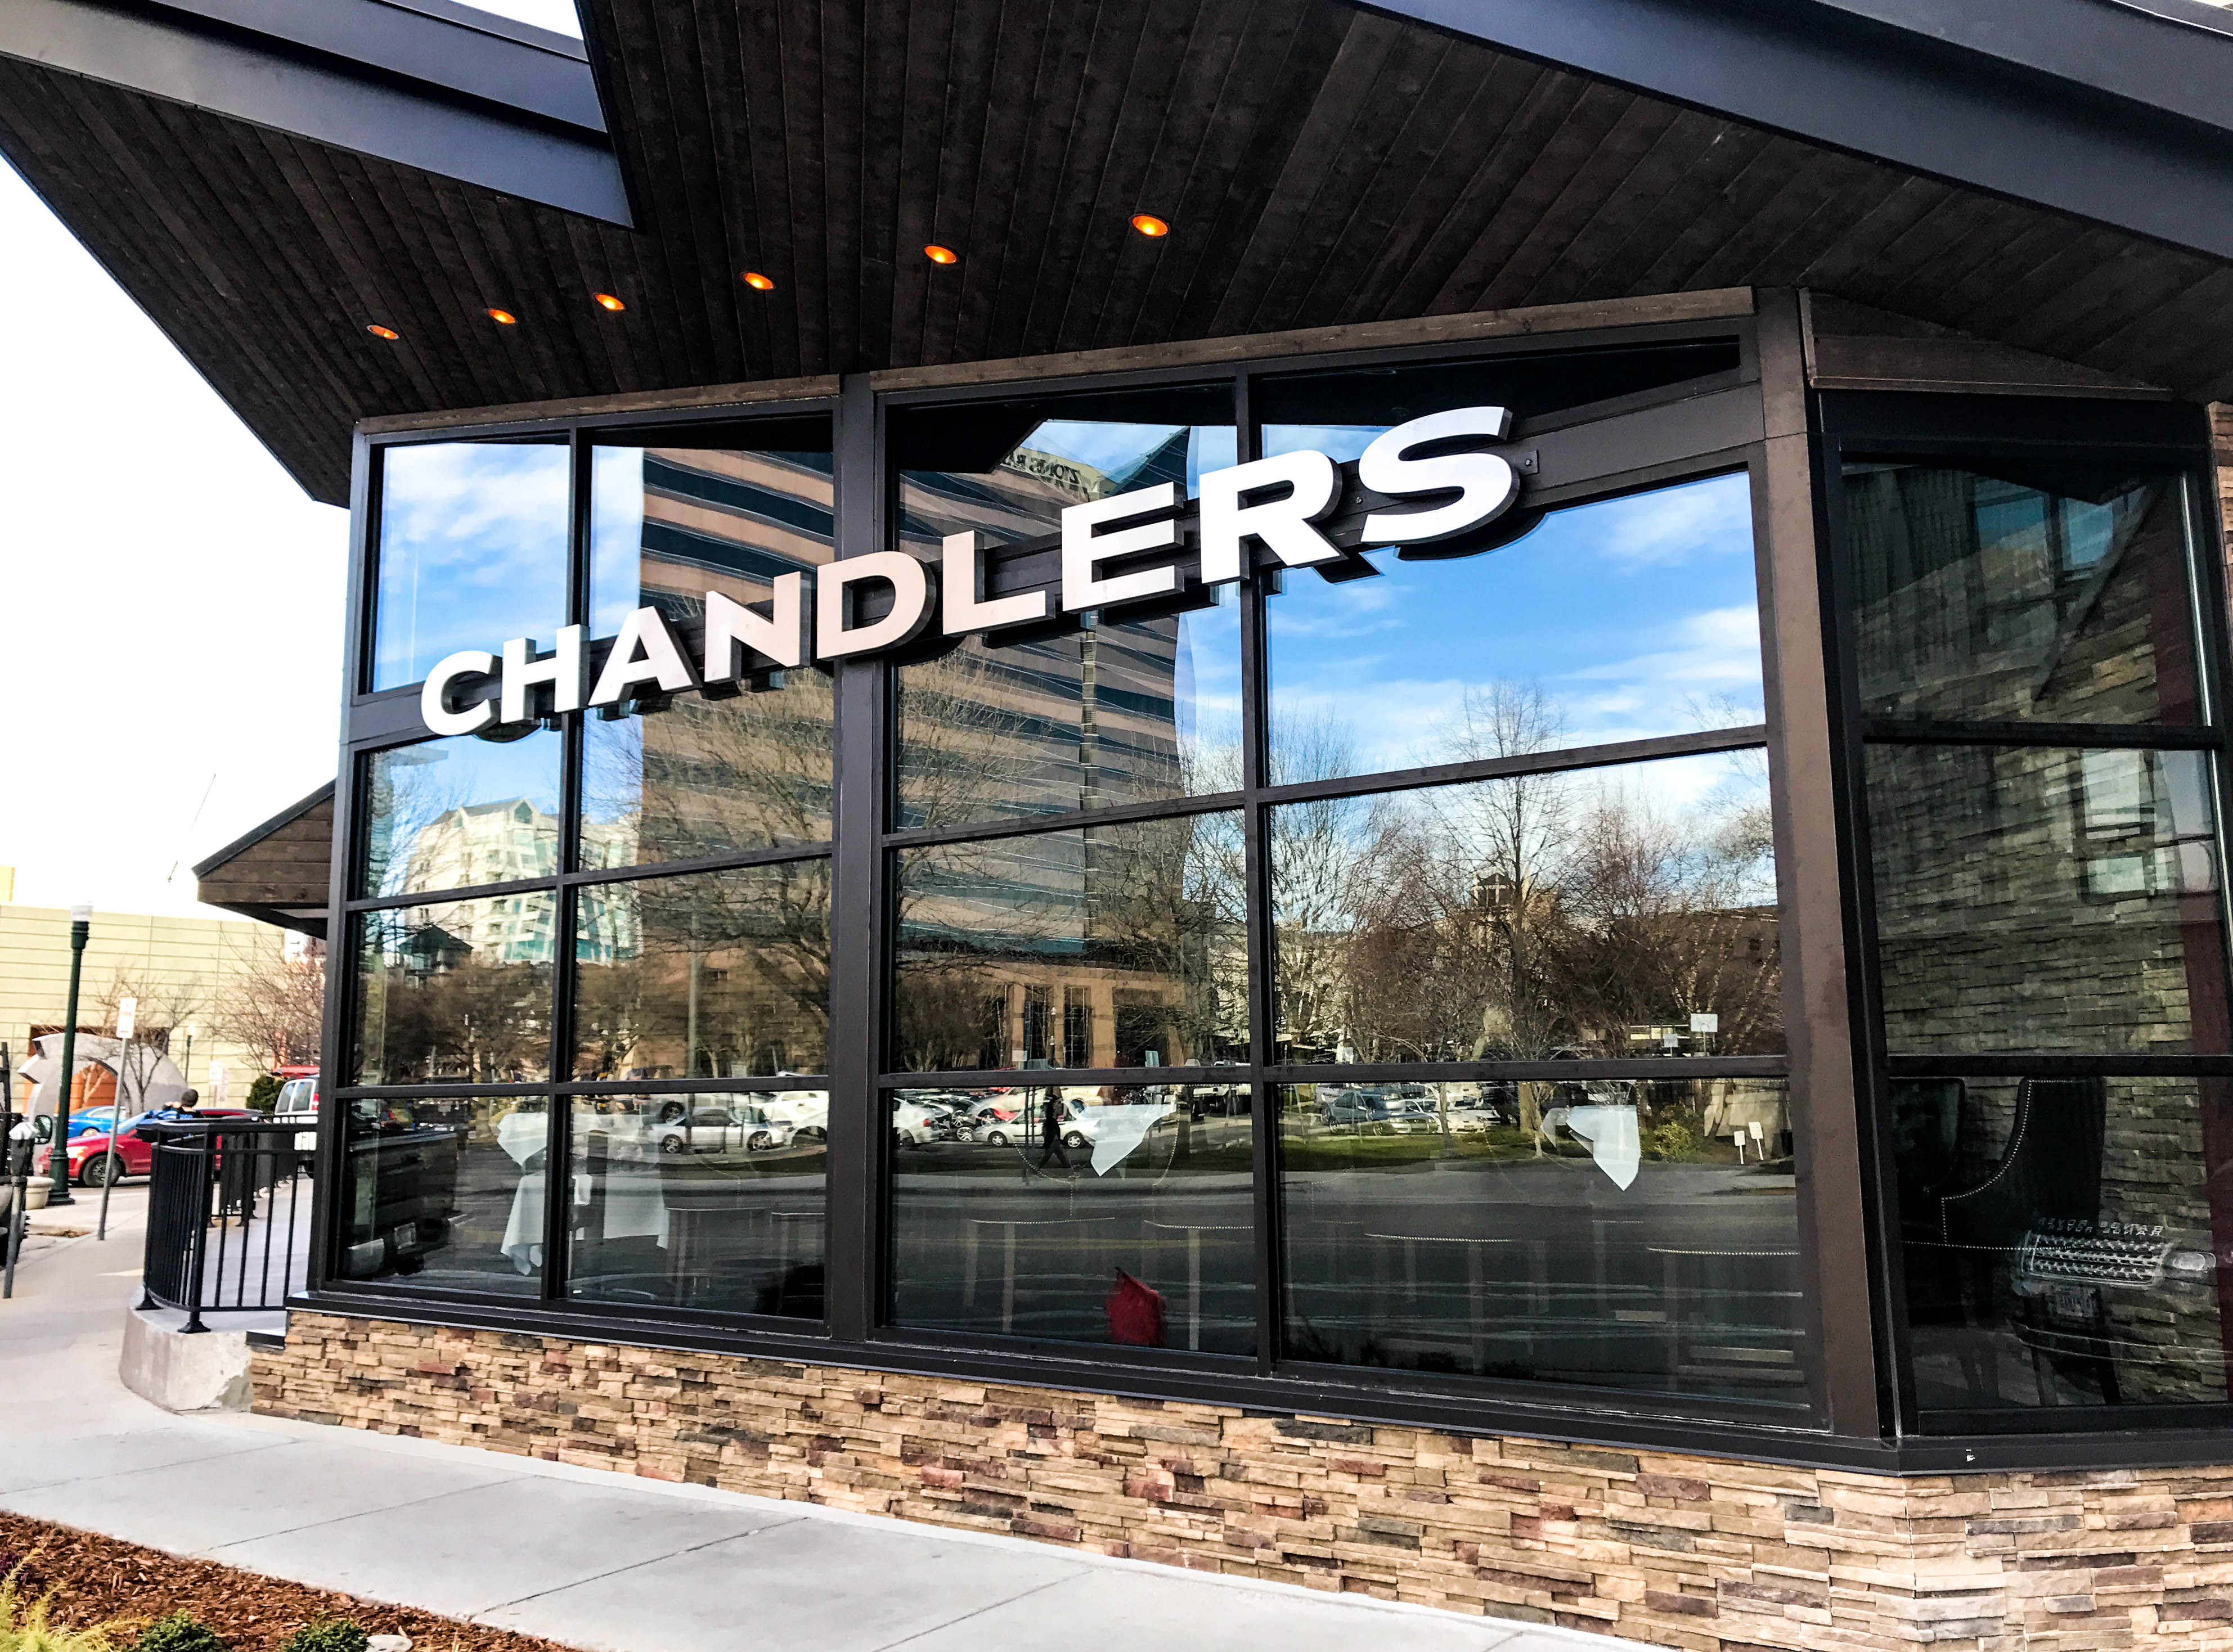 Chandlers - Boise's Best Bars